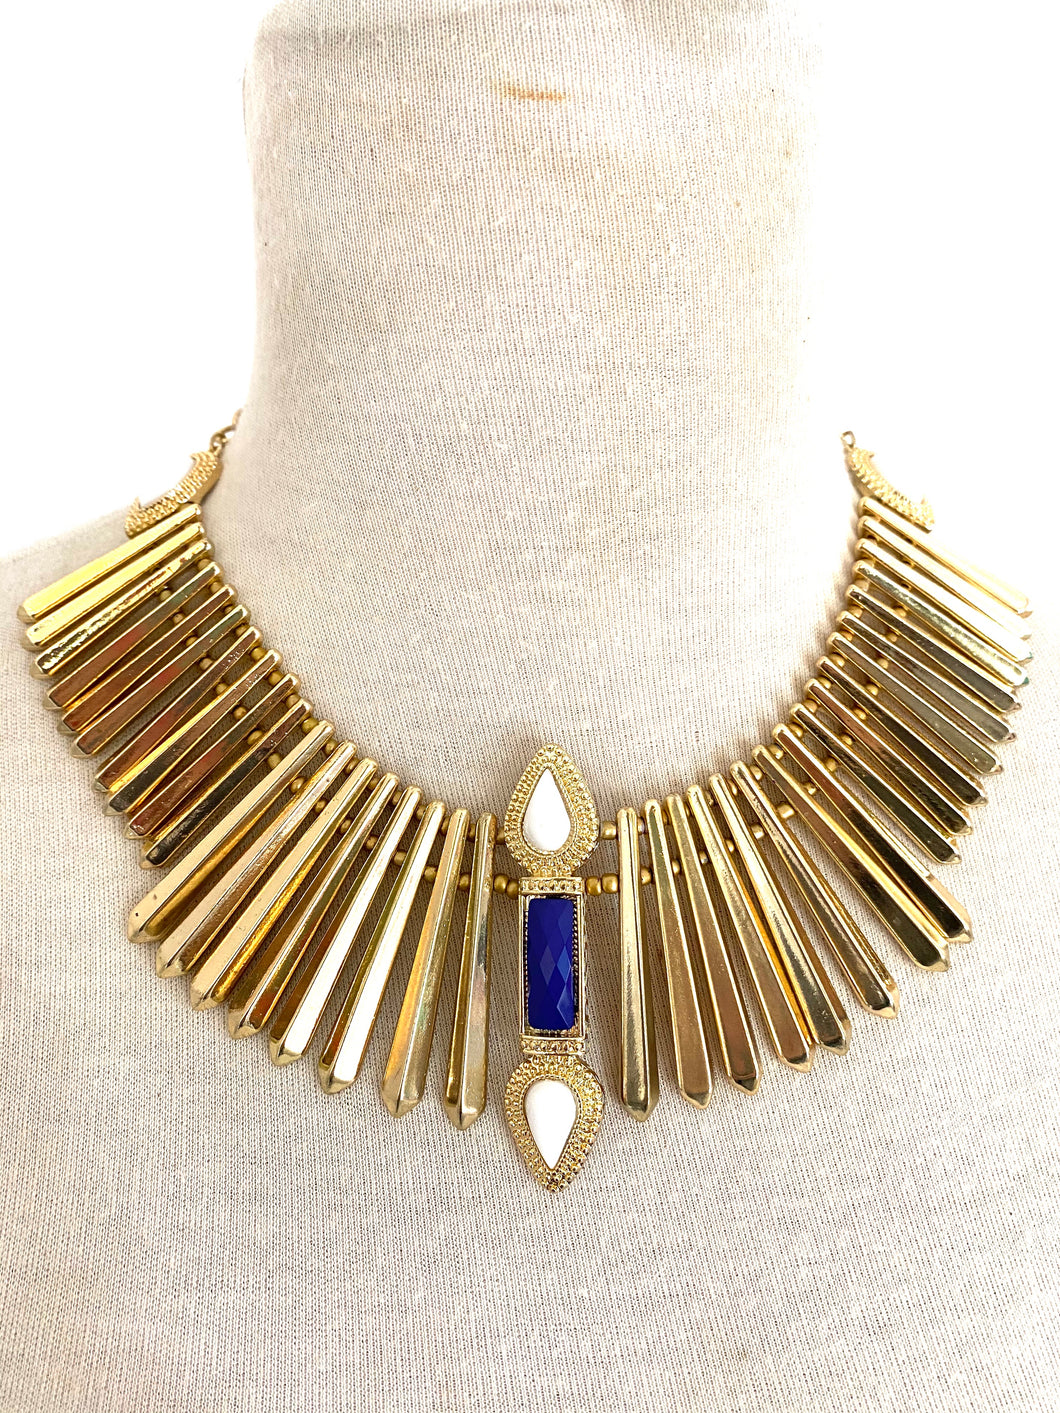 Blue and White Stone Egyptian Style Bib Necklace